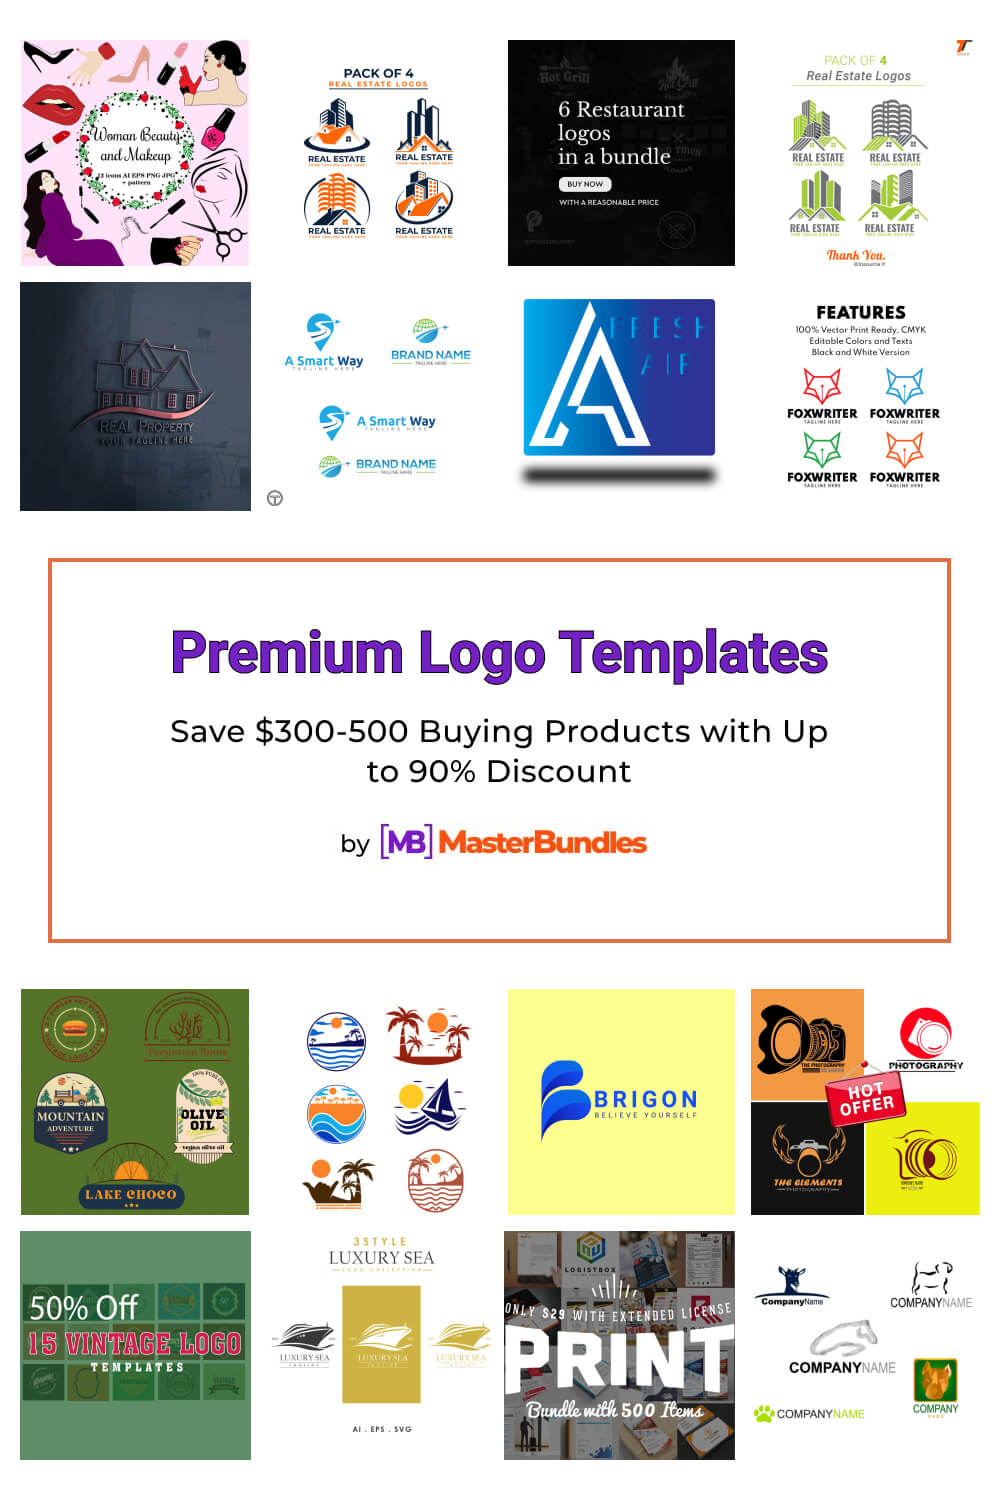 premium logo templates pinterest image.